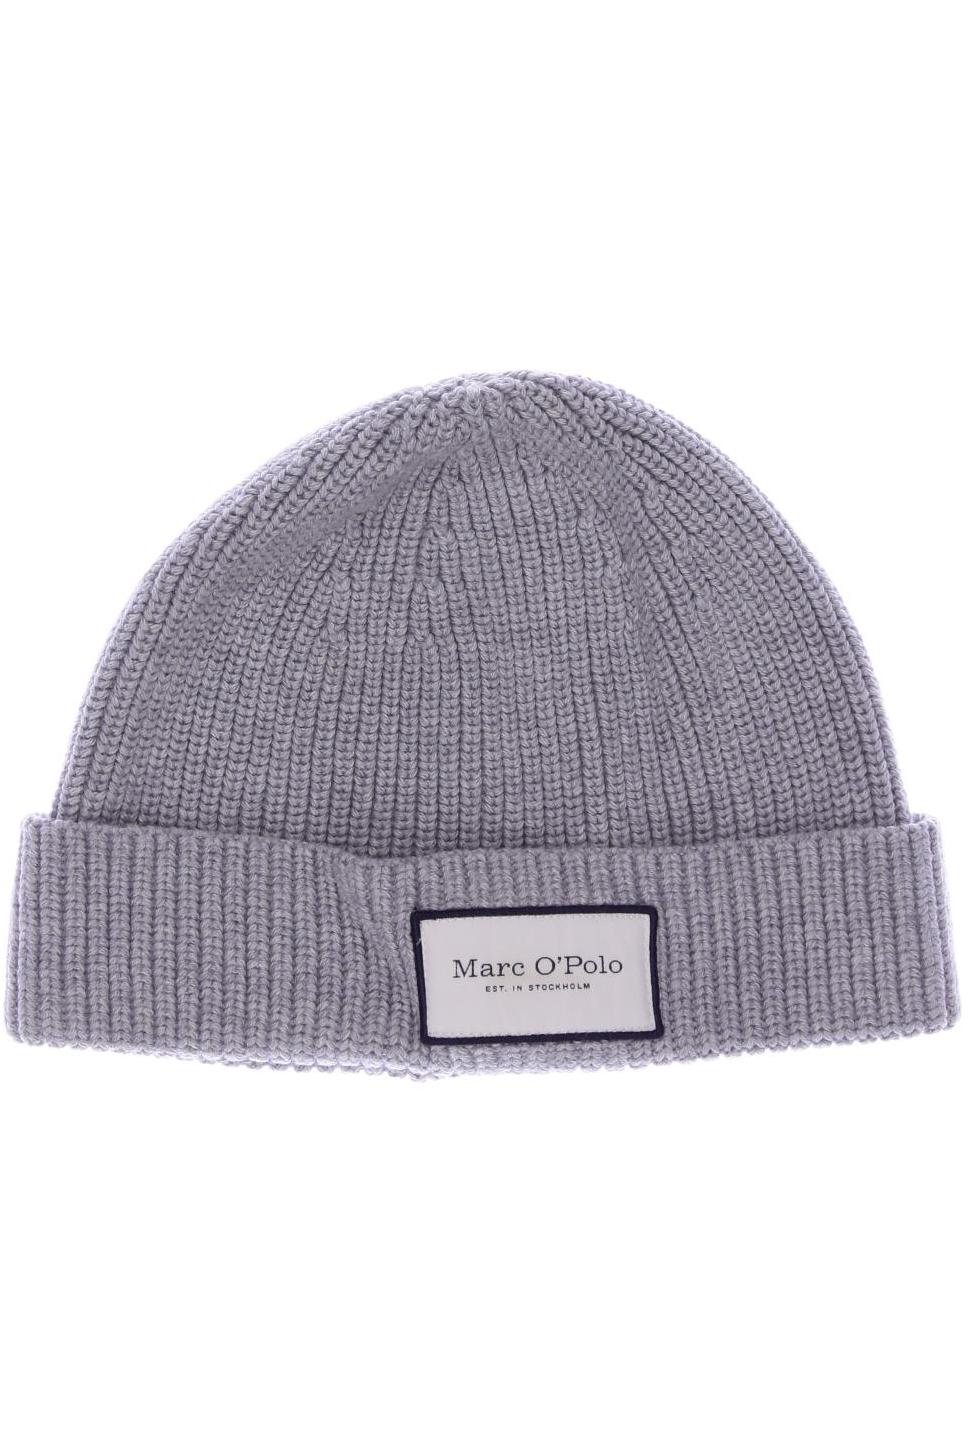 Marc O Polo Damen Hut/Mütze, grau von Marc O Polo